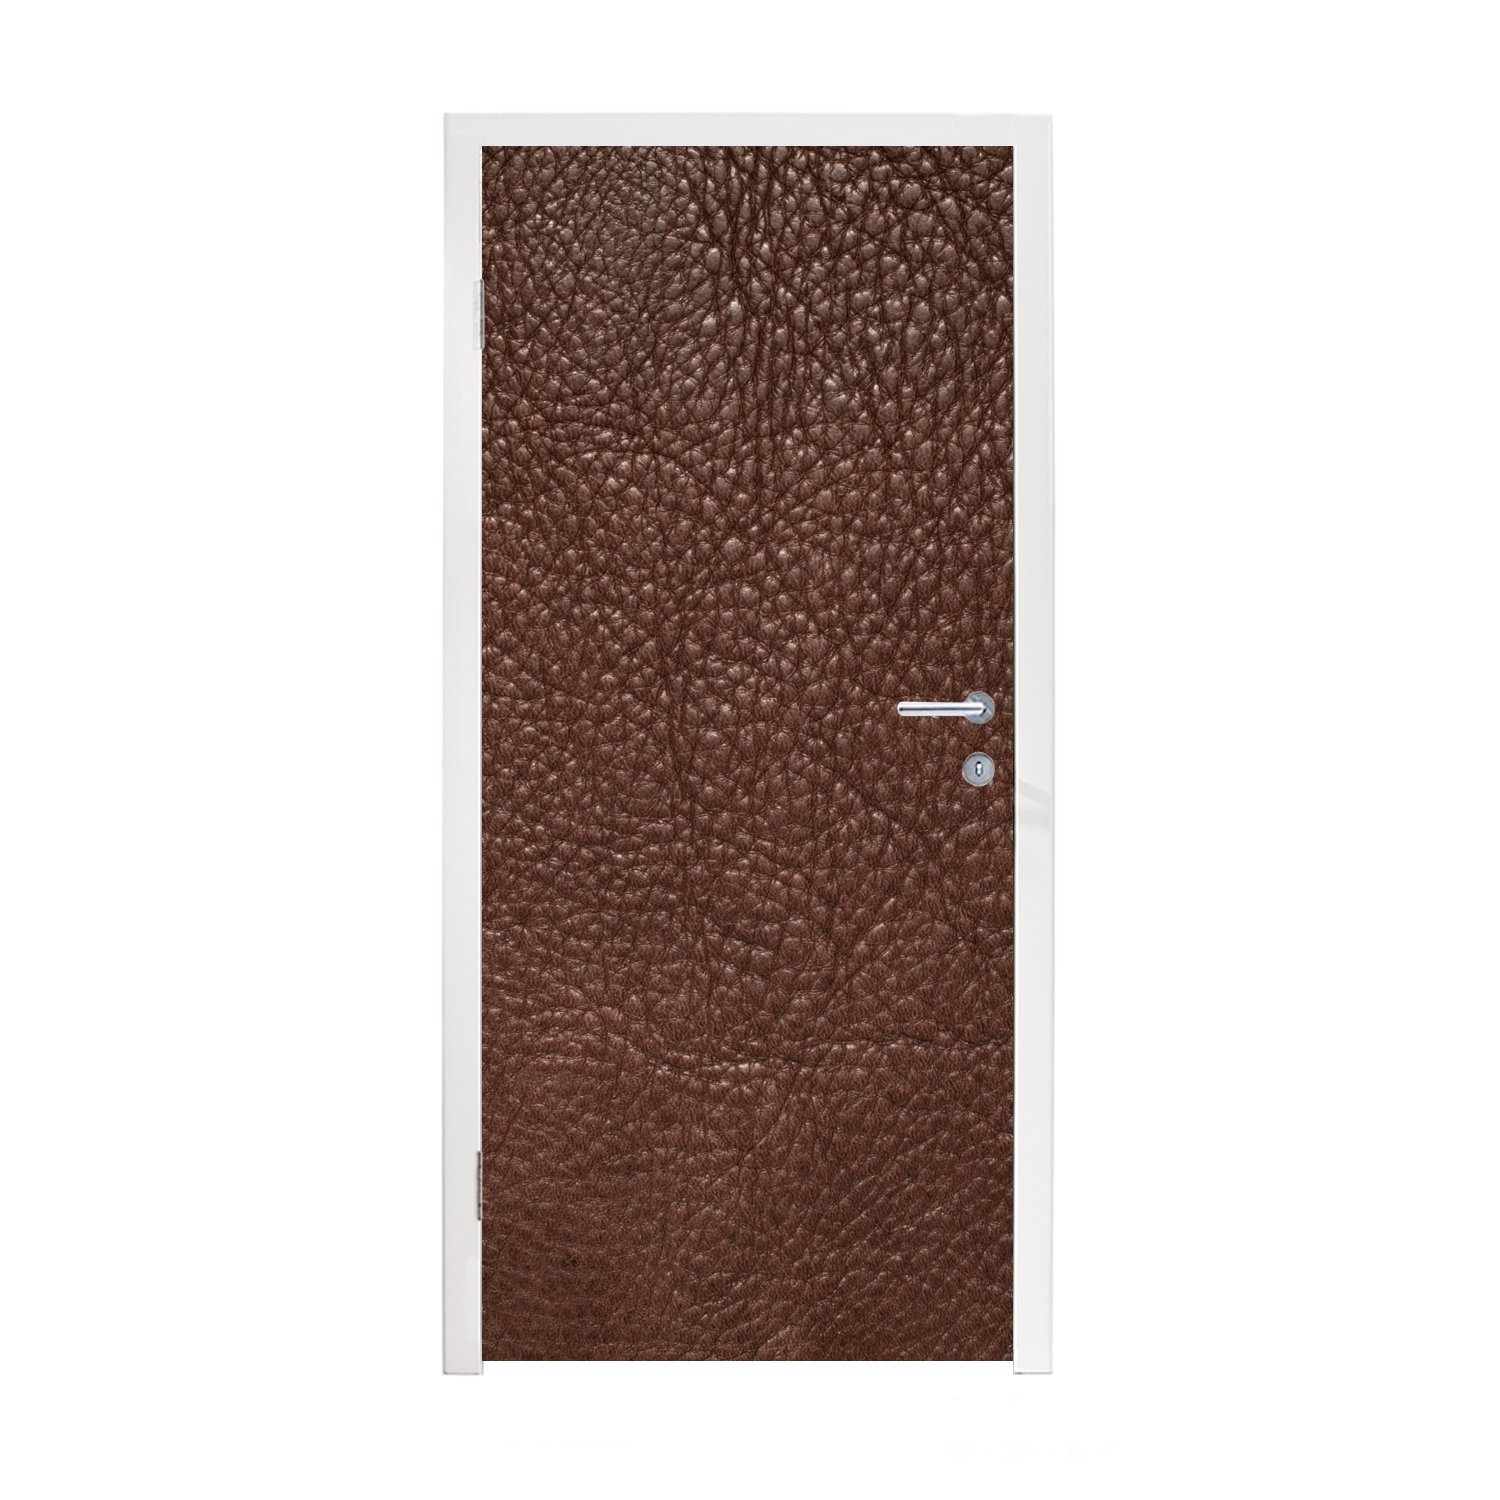 MuchoWow Türtapete Leder - Braun - Textur - Design - Lederoptik, Matt, bedruckt, (1 St), Fototapete für Tür, Türaufkleber, 75x205 cm